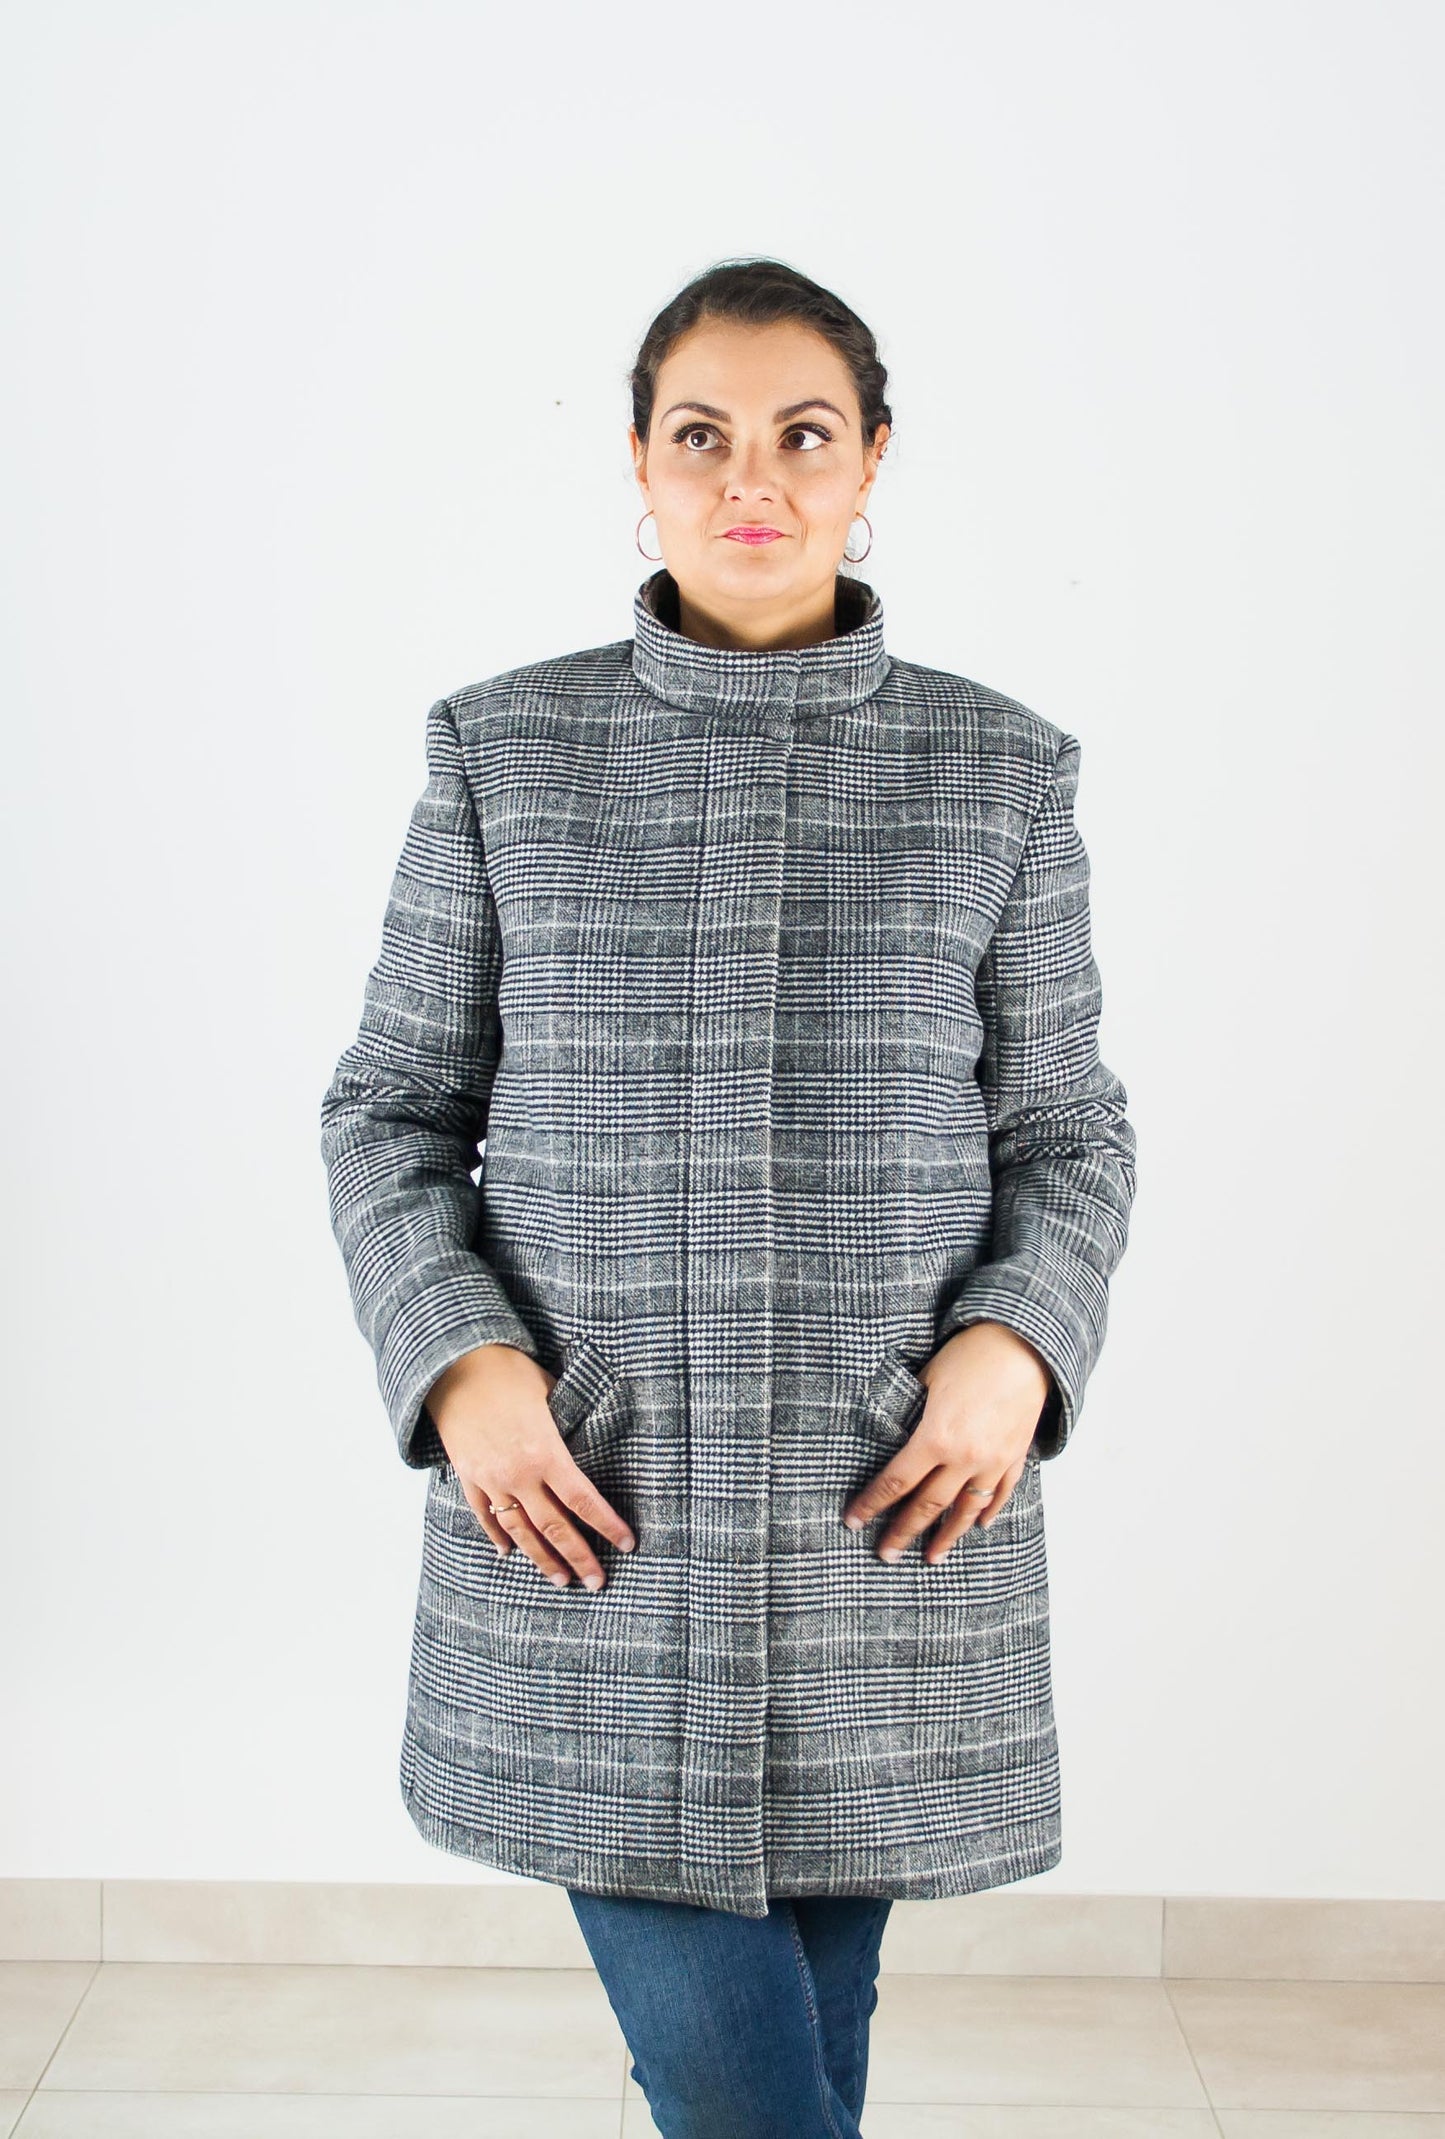 Anne Kerdiles Couture Tromsø Coat